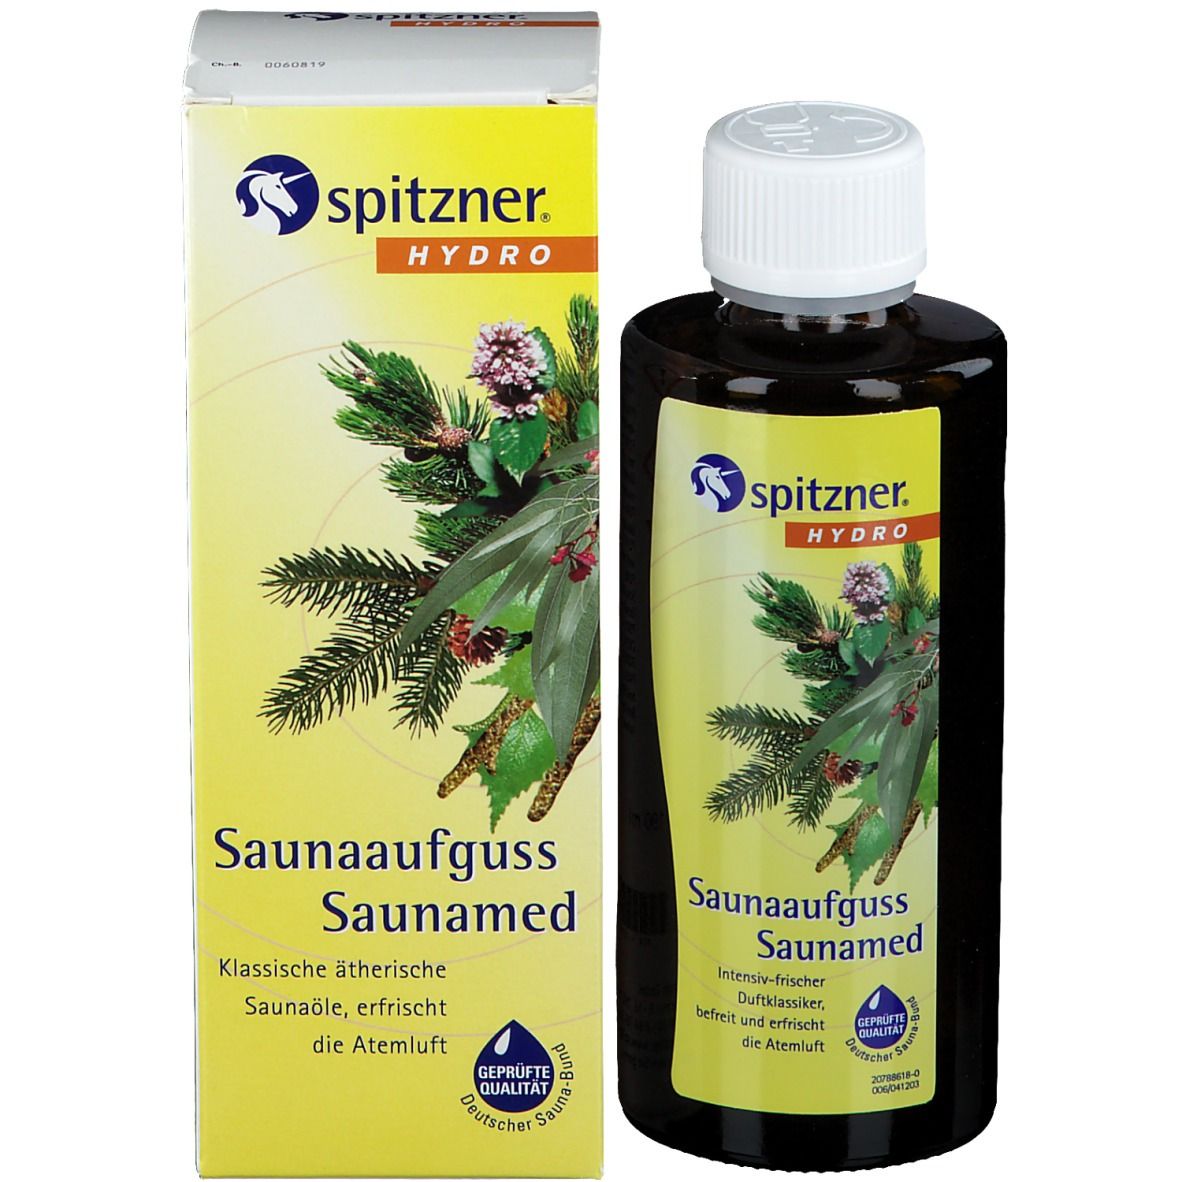 Spitzner® Hydro Saunaaufguss Saunamed